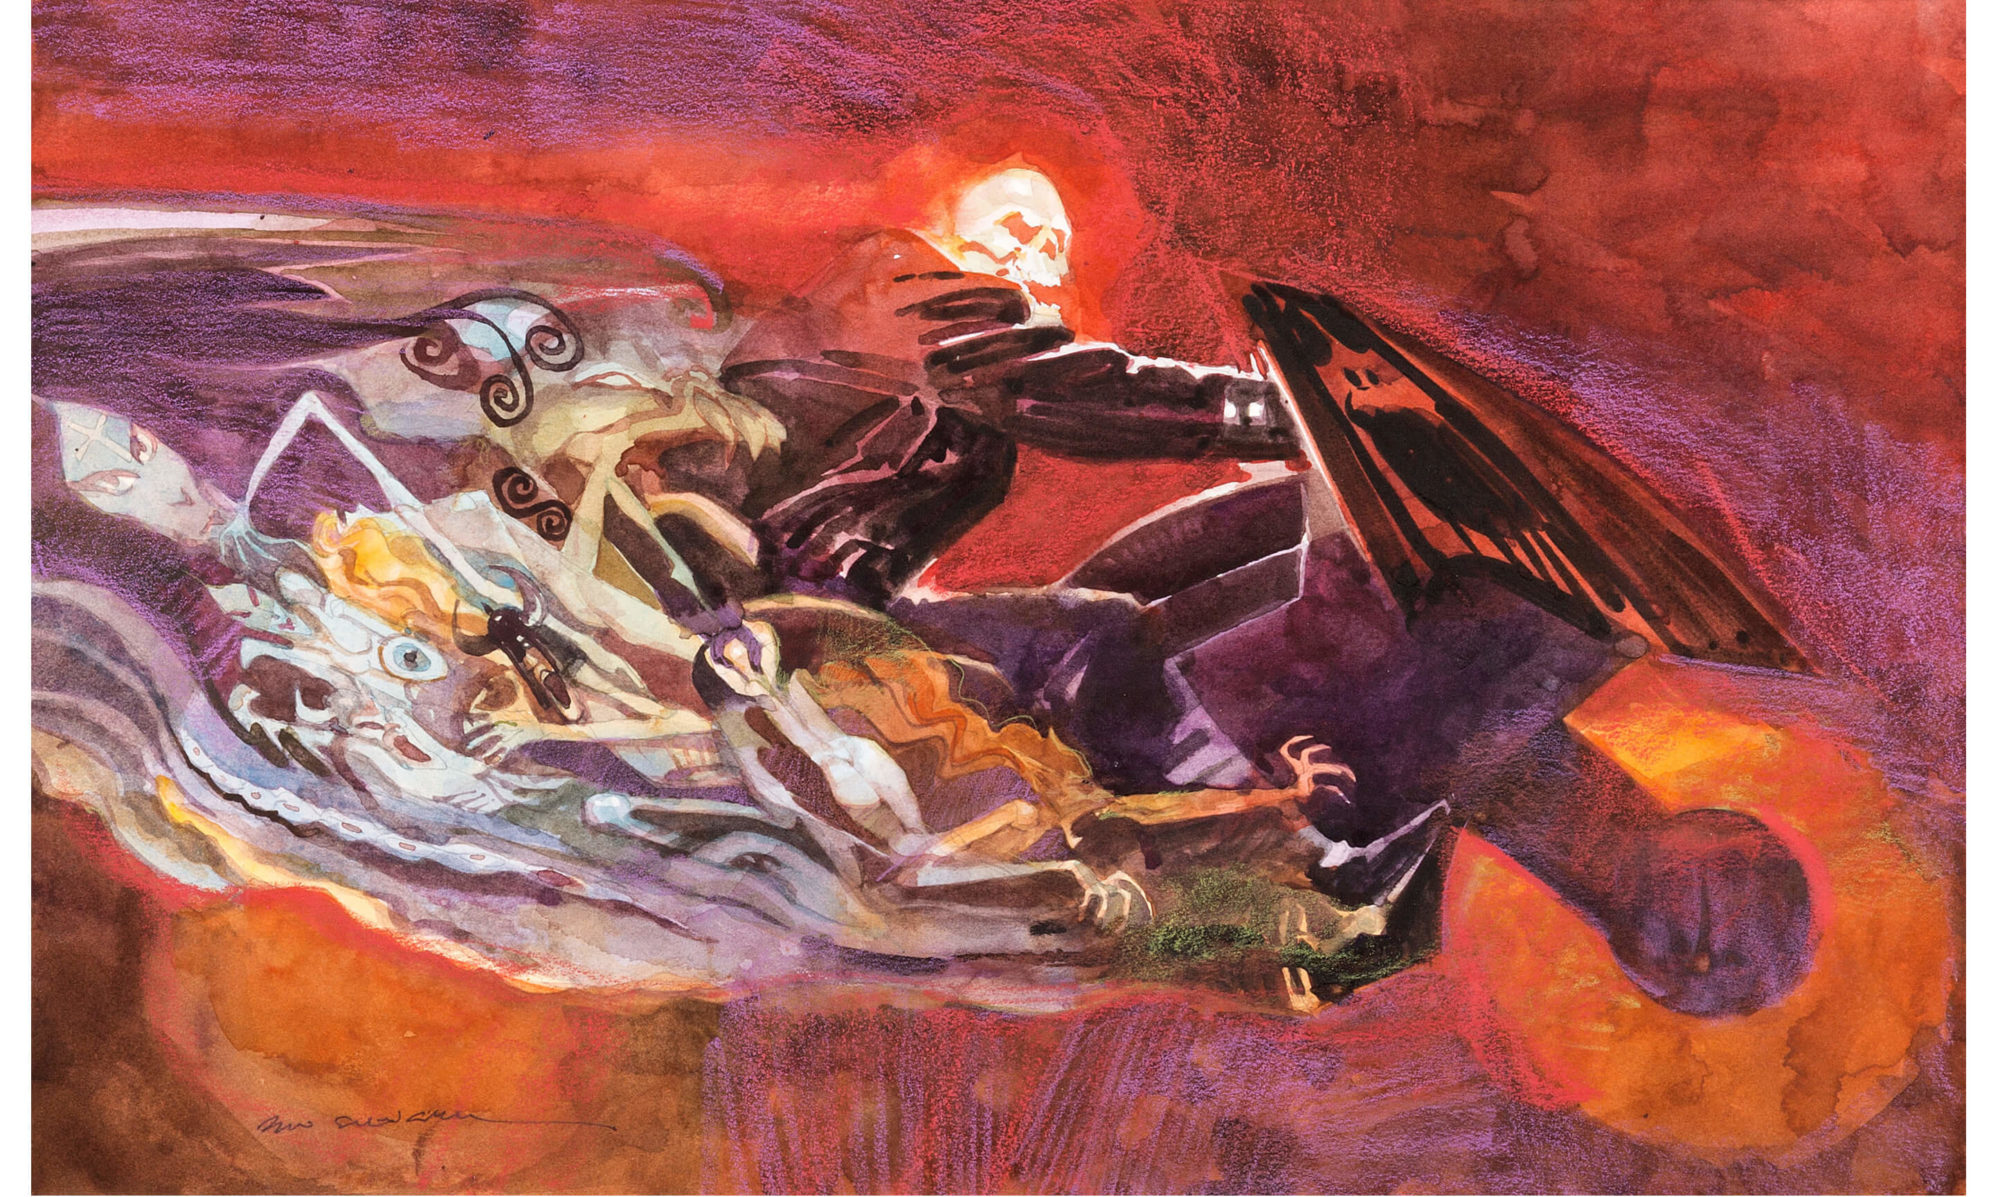 Bill Sienkiewicz Ghost Rider painting